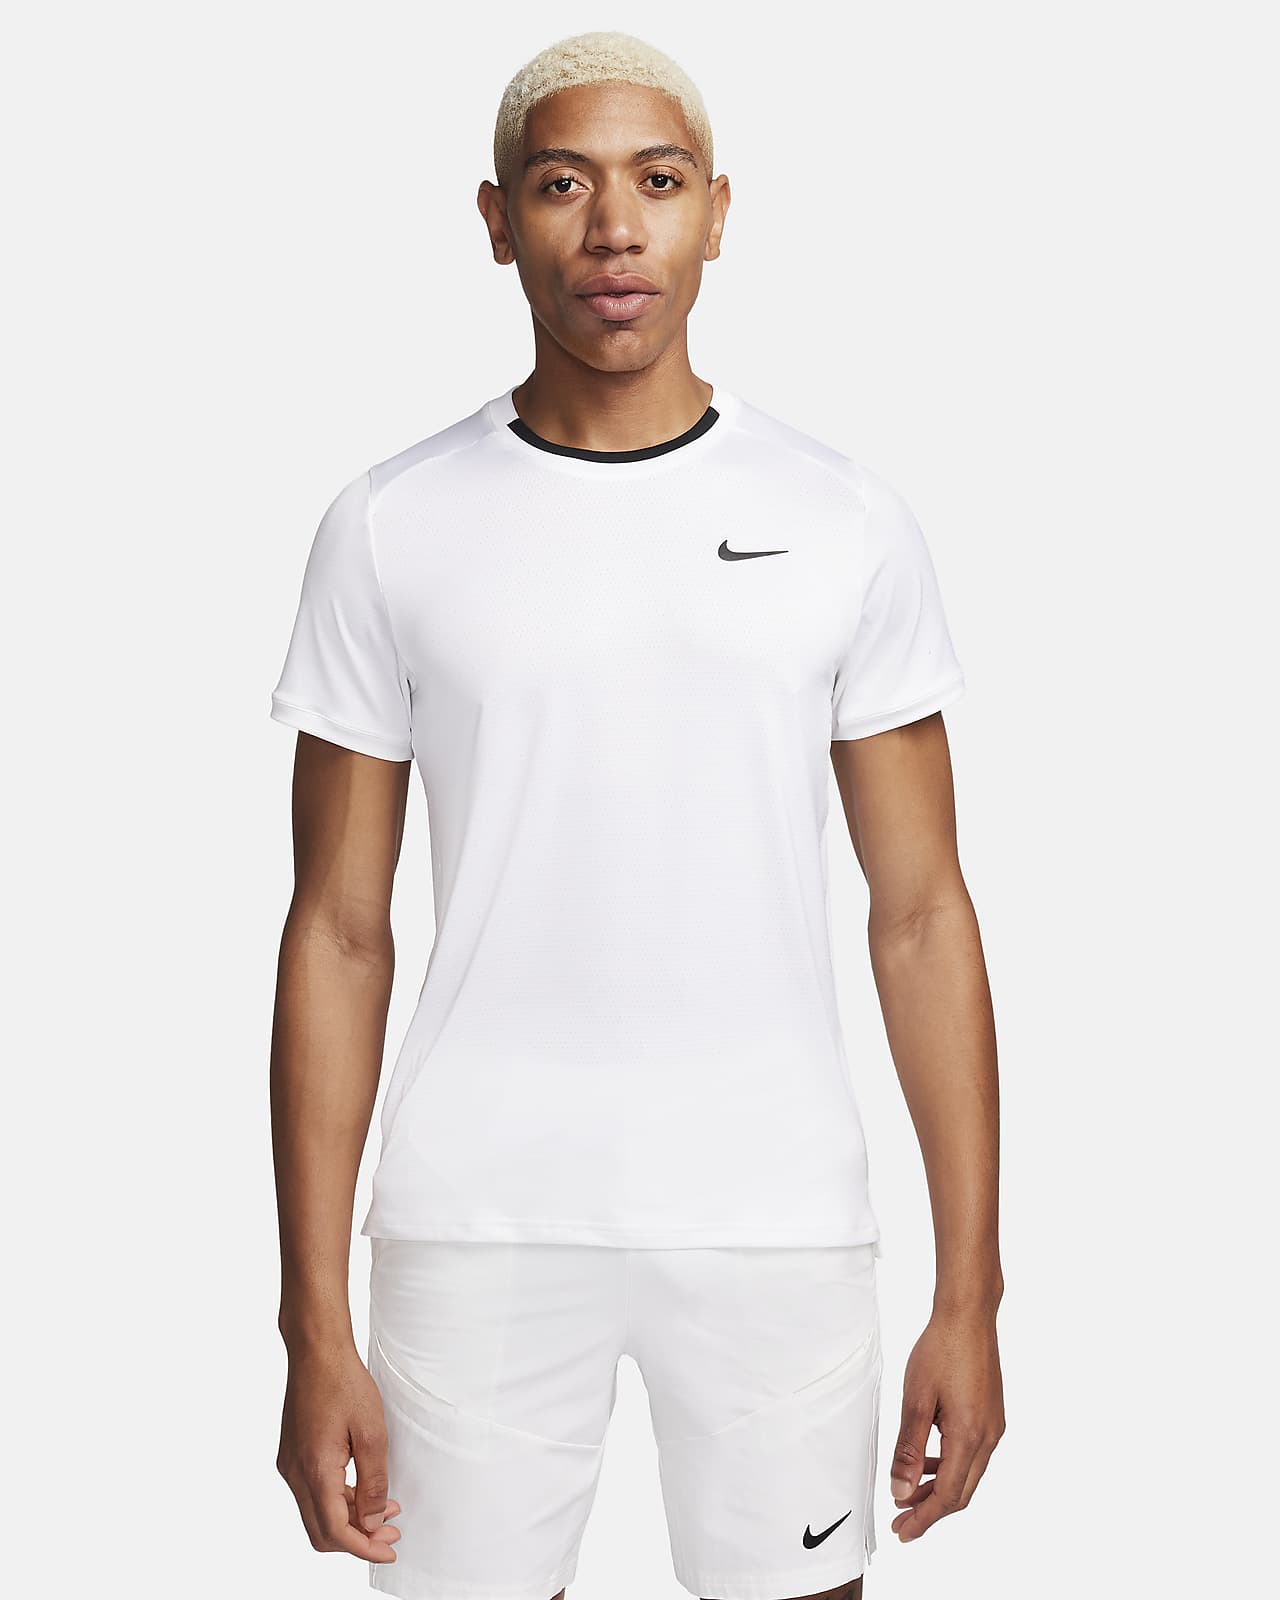 Nike Court Advantage Men's Tennis Pant Obsidian/white